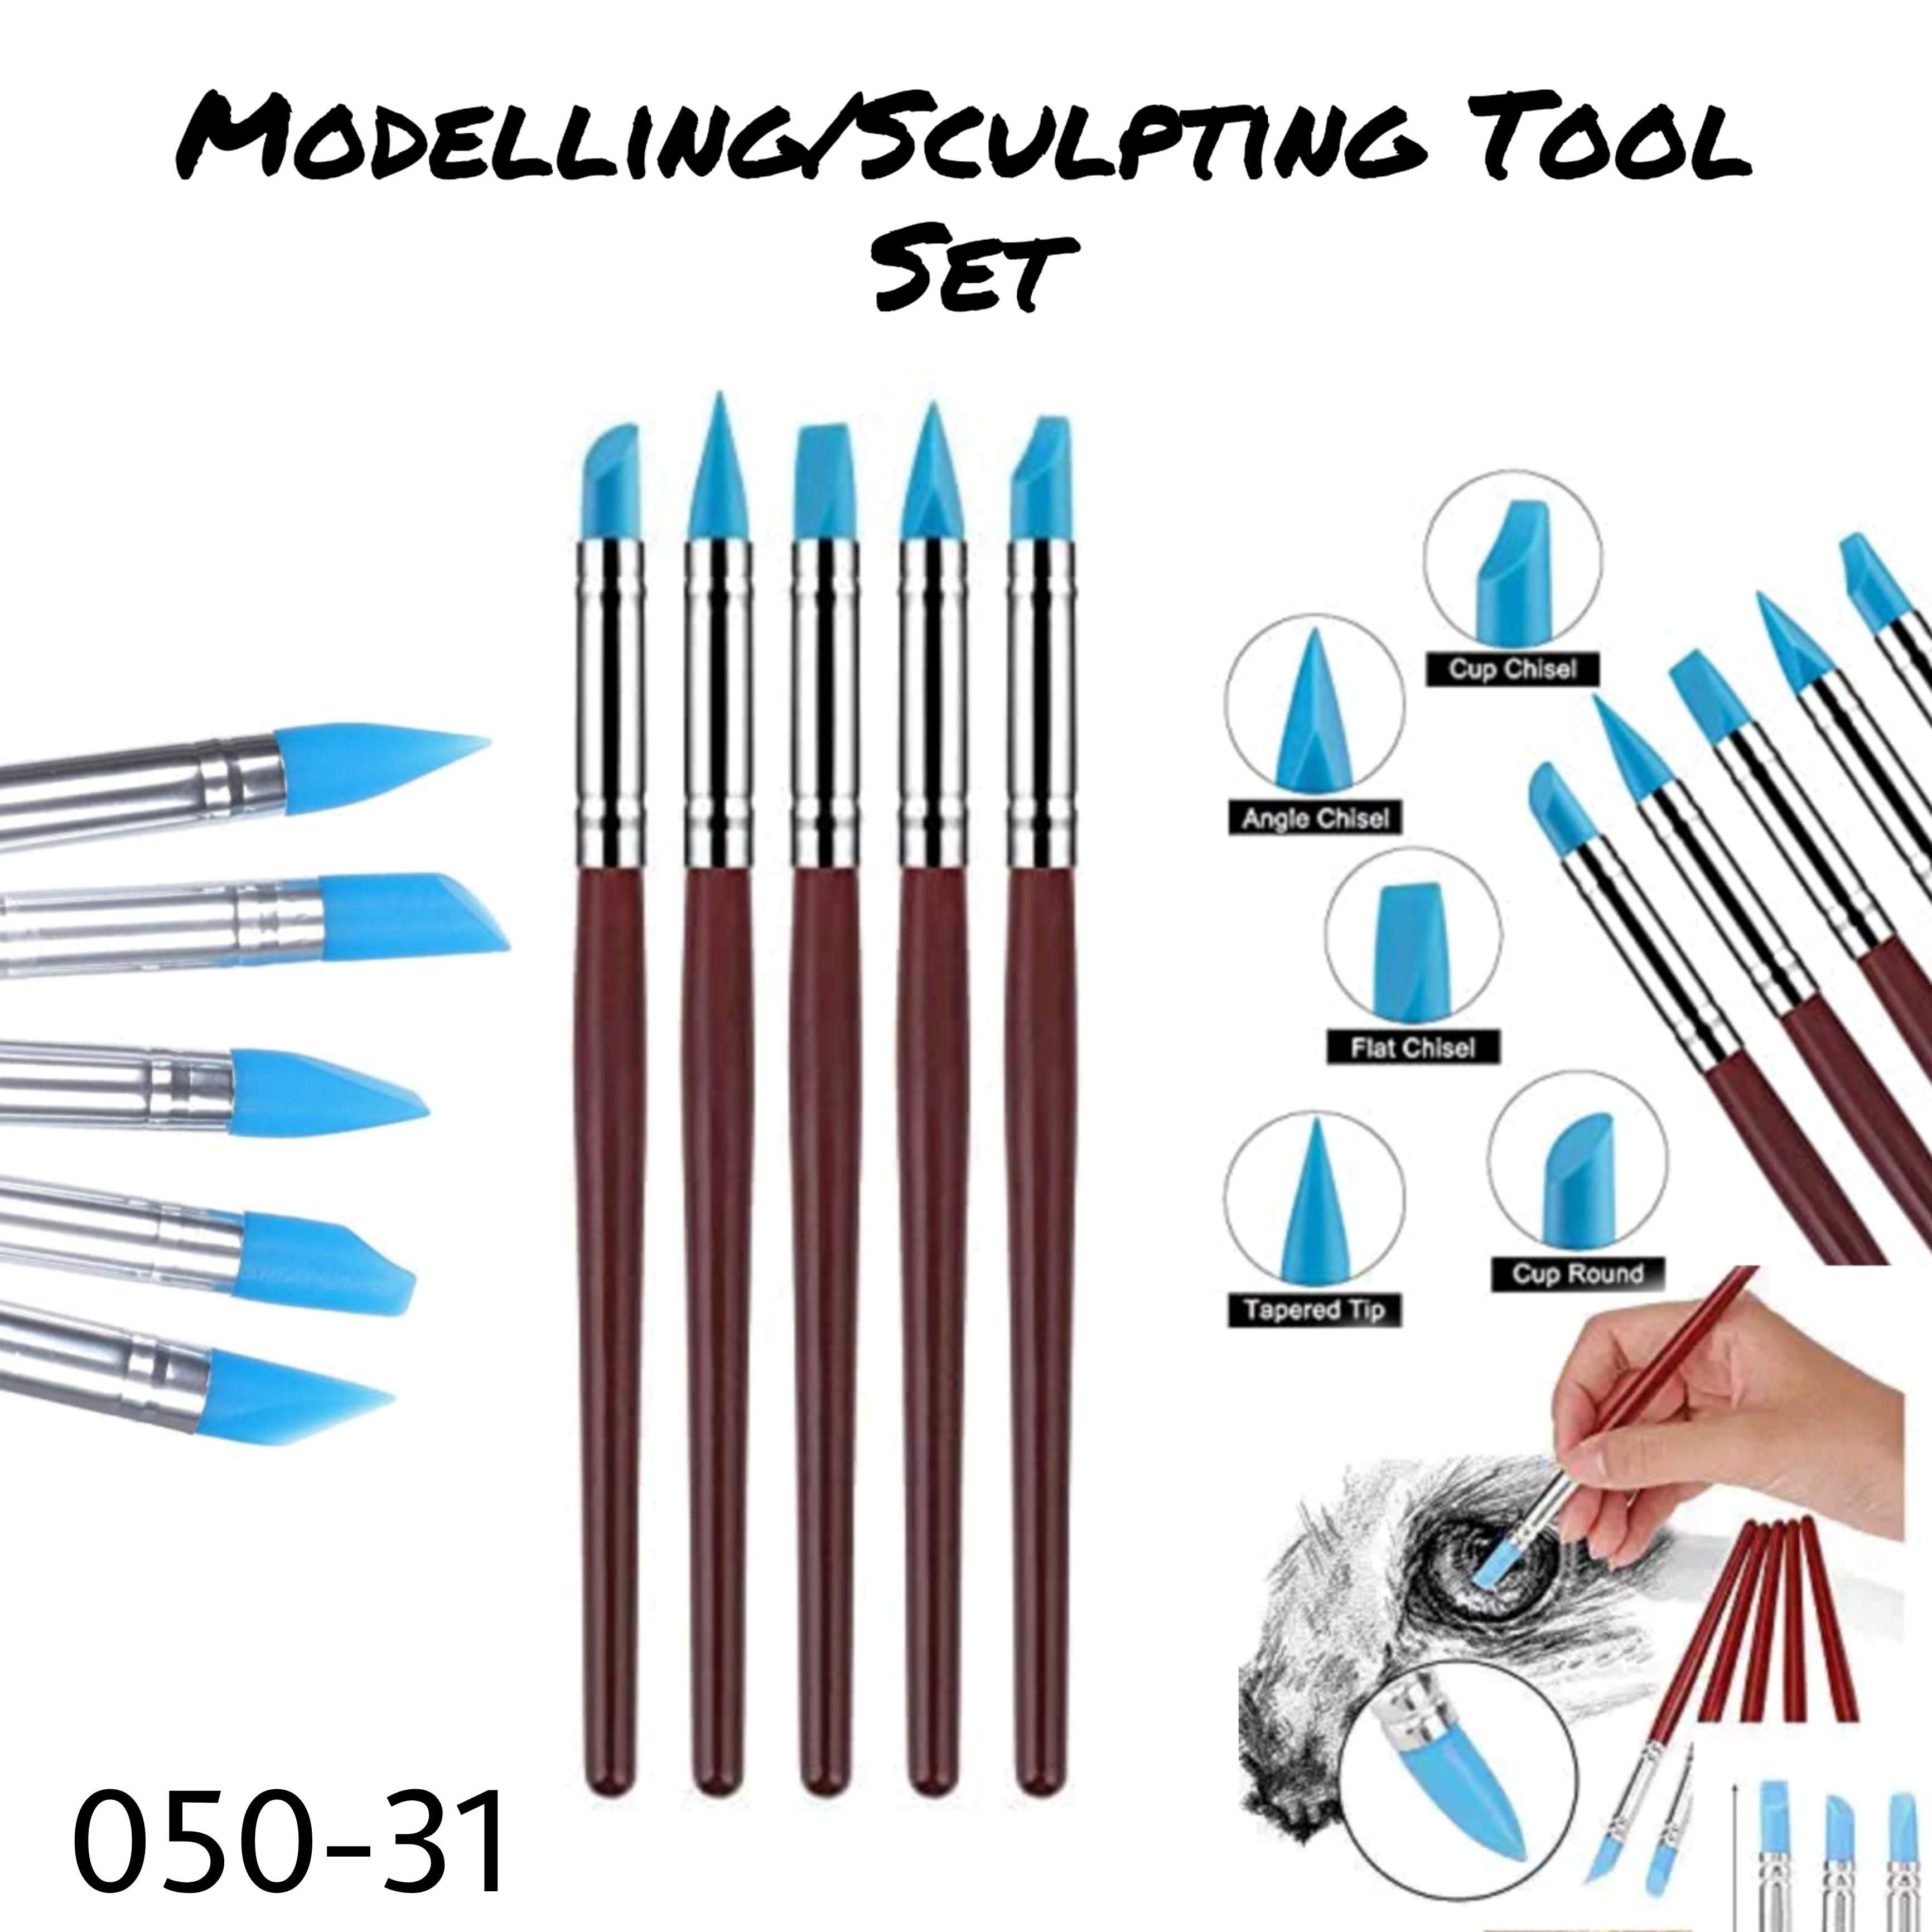 Modelling/Sculpting Tool Set